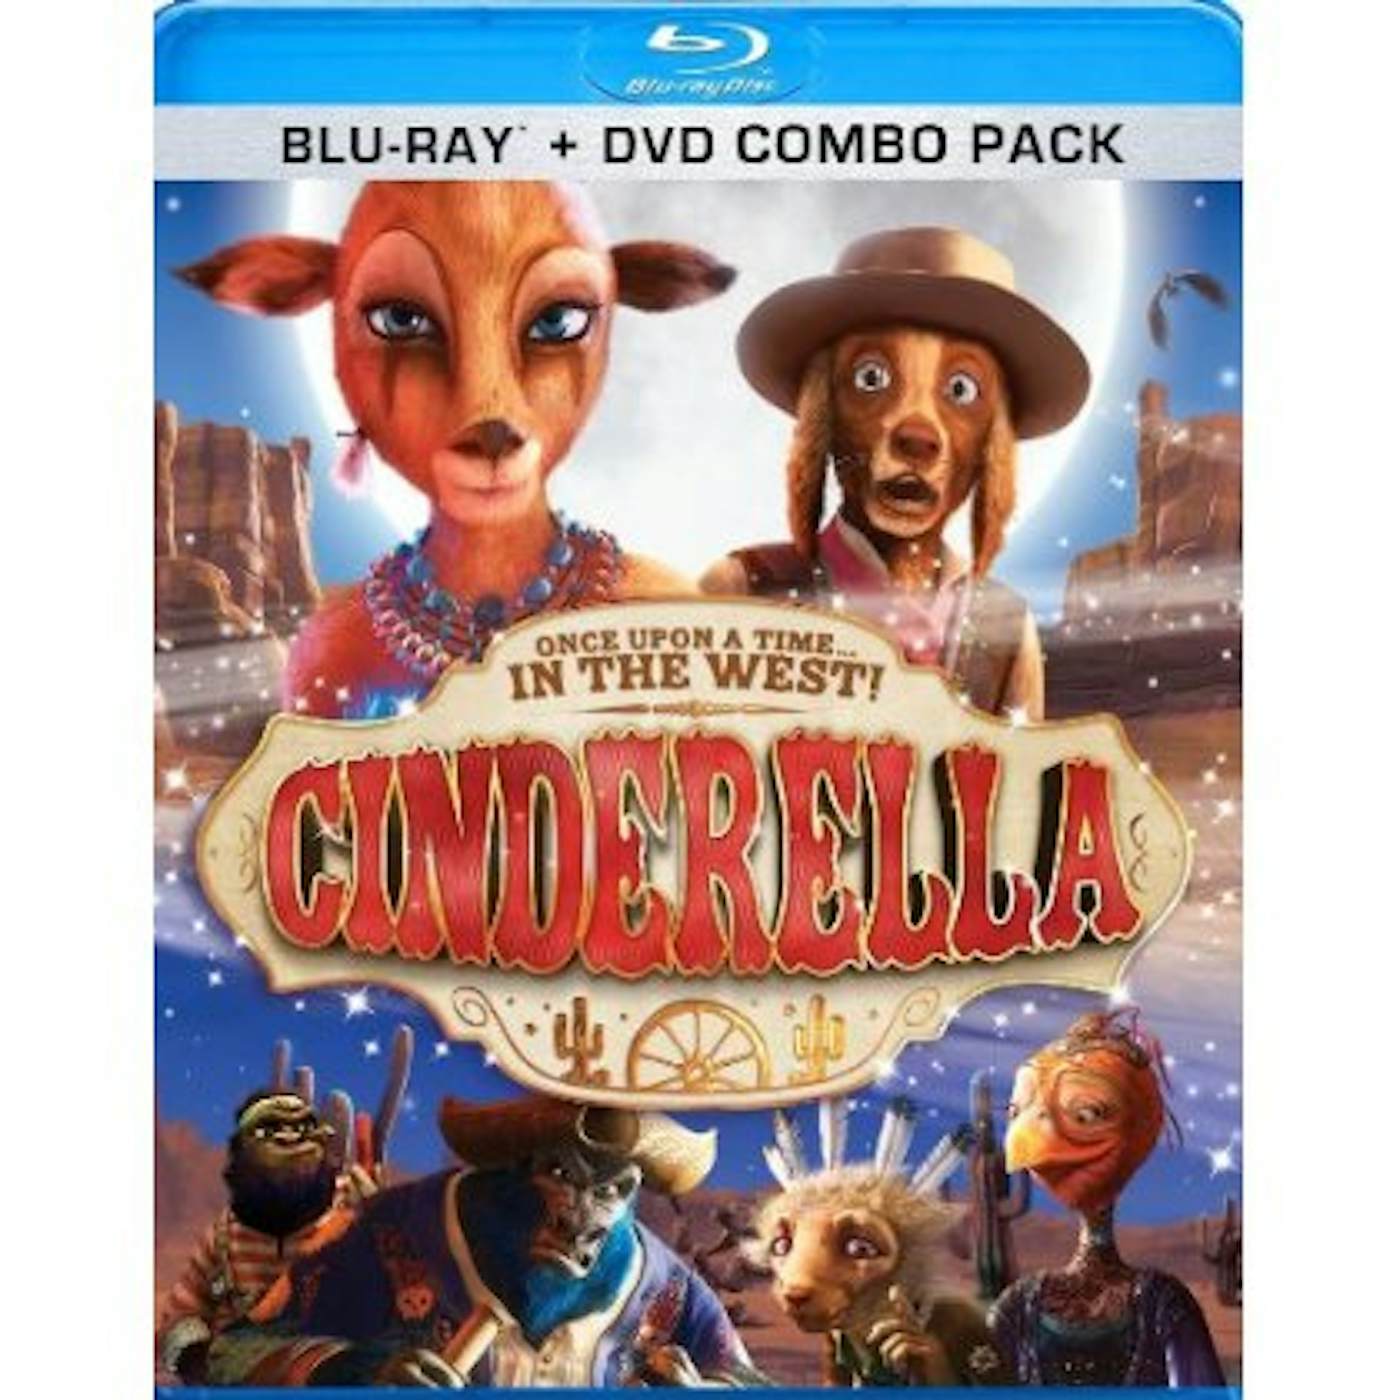 CINDERELLA Blu-ray